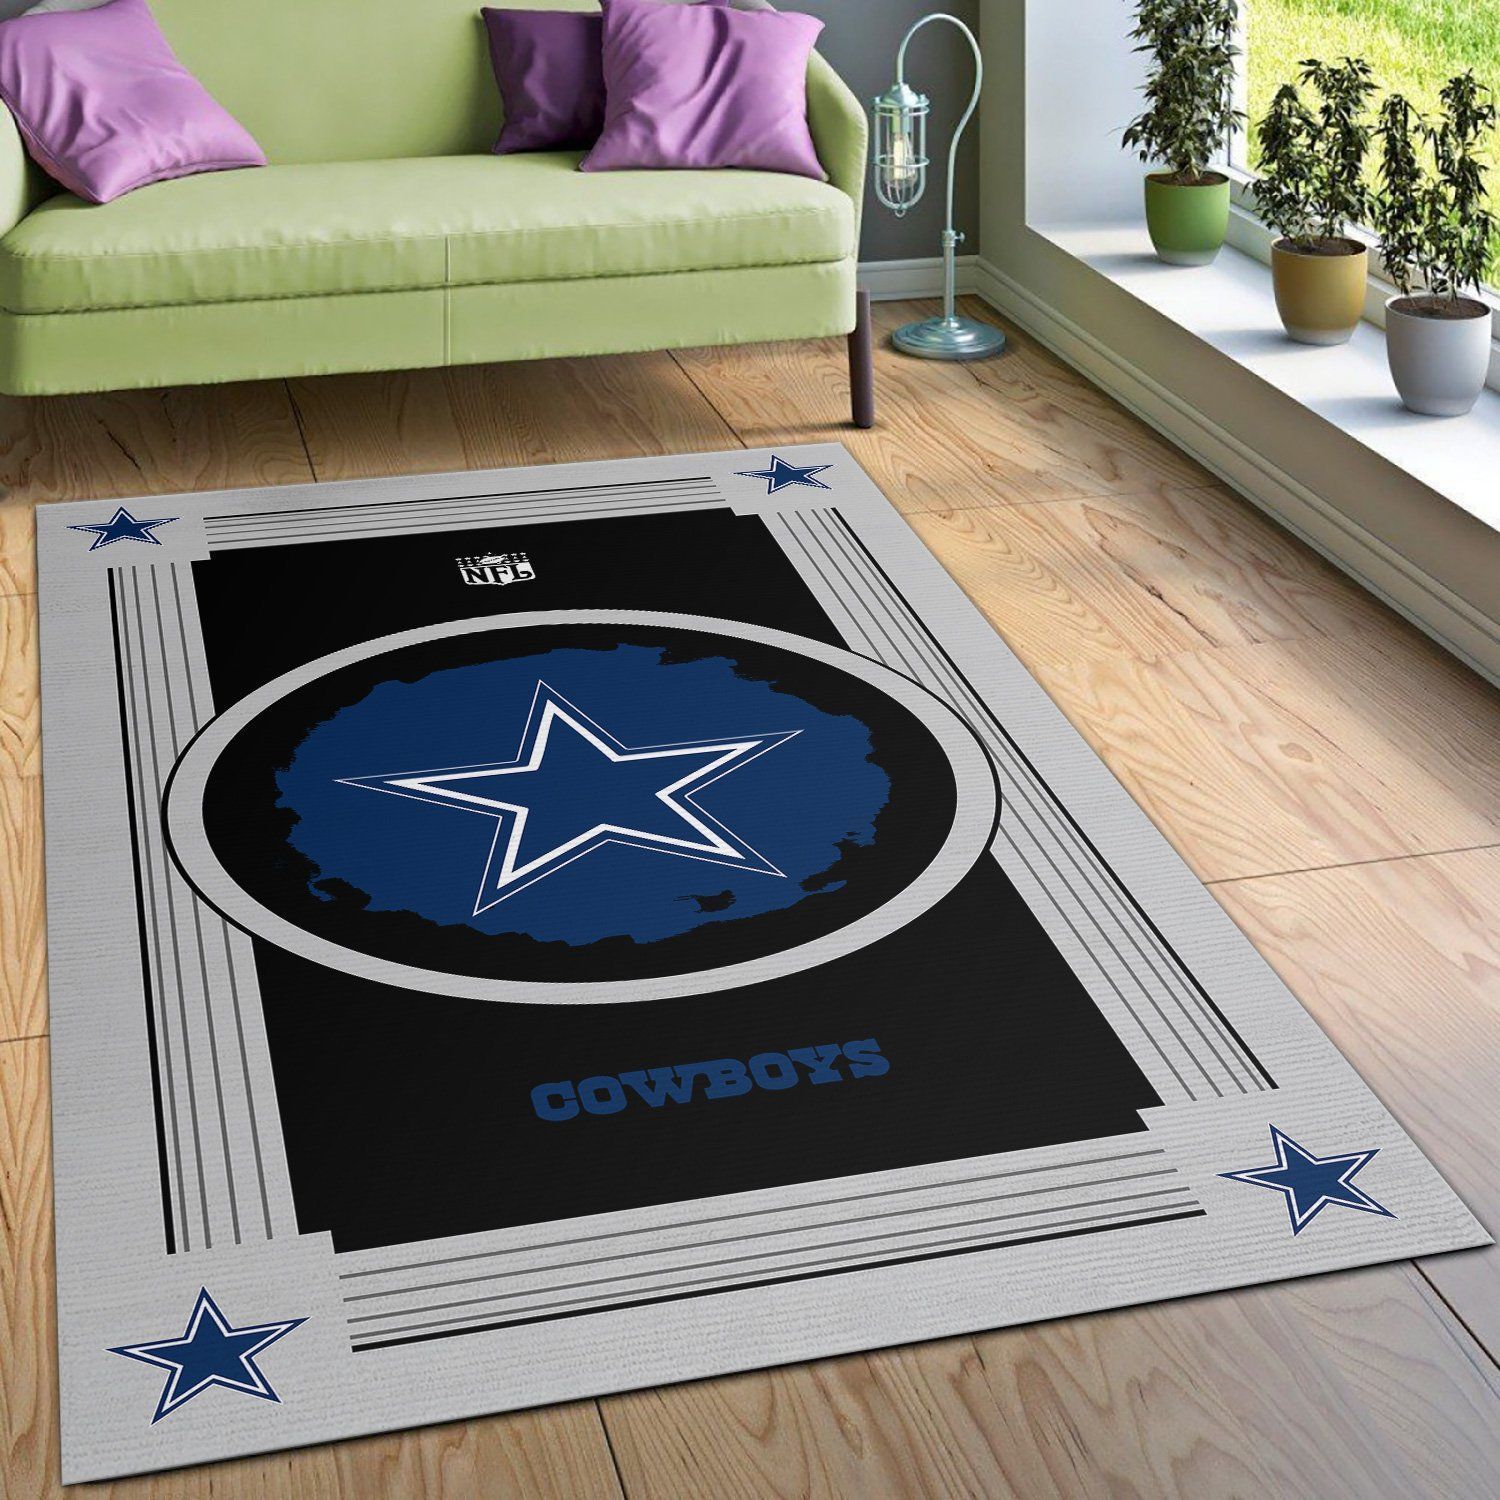 Dallas Cowboys NFL Logo Style Area Rugs Living Room Carpet Floor Decor The US Decor - Indoor Outdoor Rugs 2